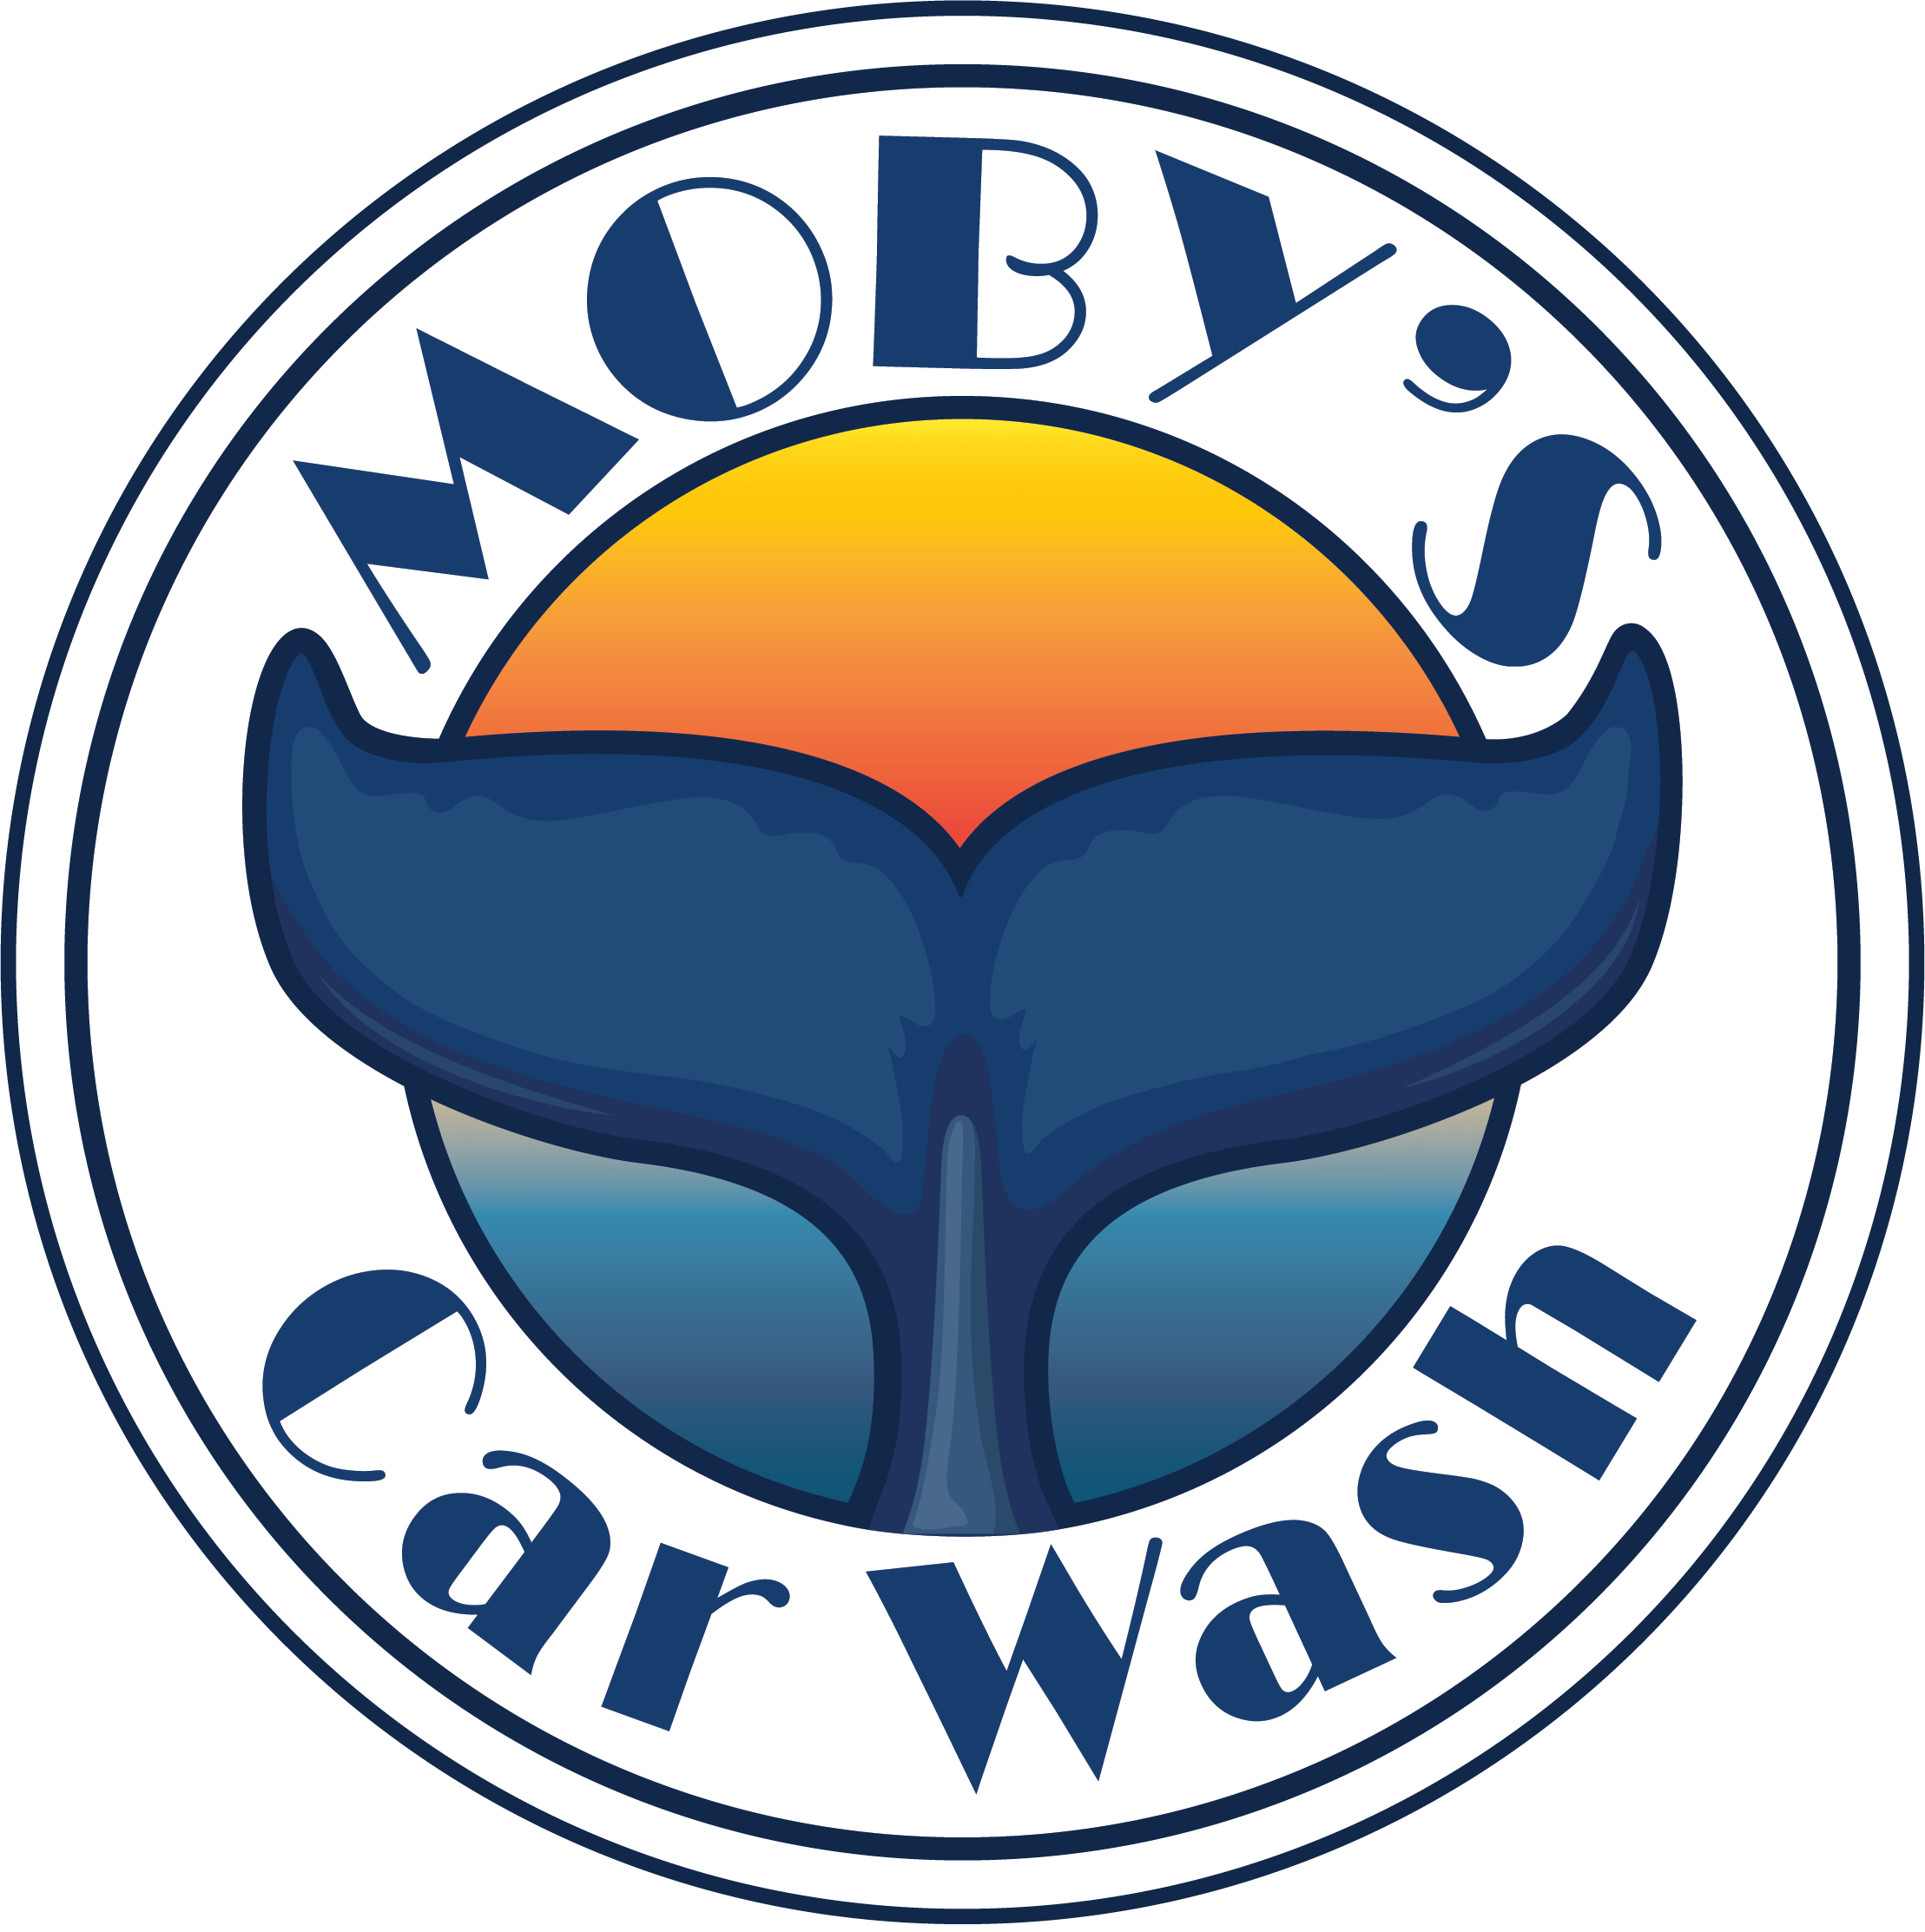 Smart Car Wash logo, Vector Logo of Smart Car Wash brand free download  (eps, ai, png, cdr) formats